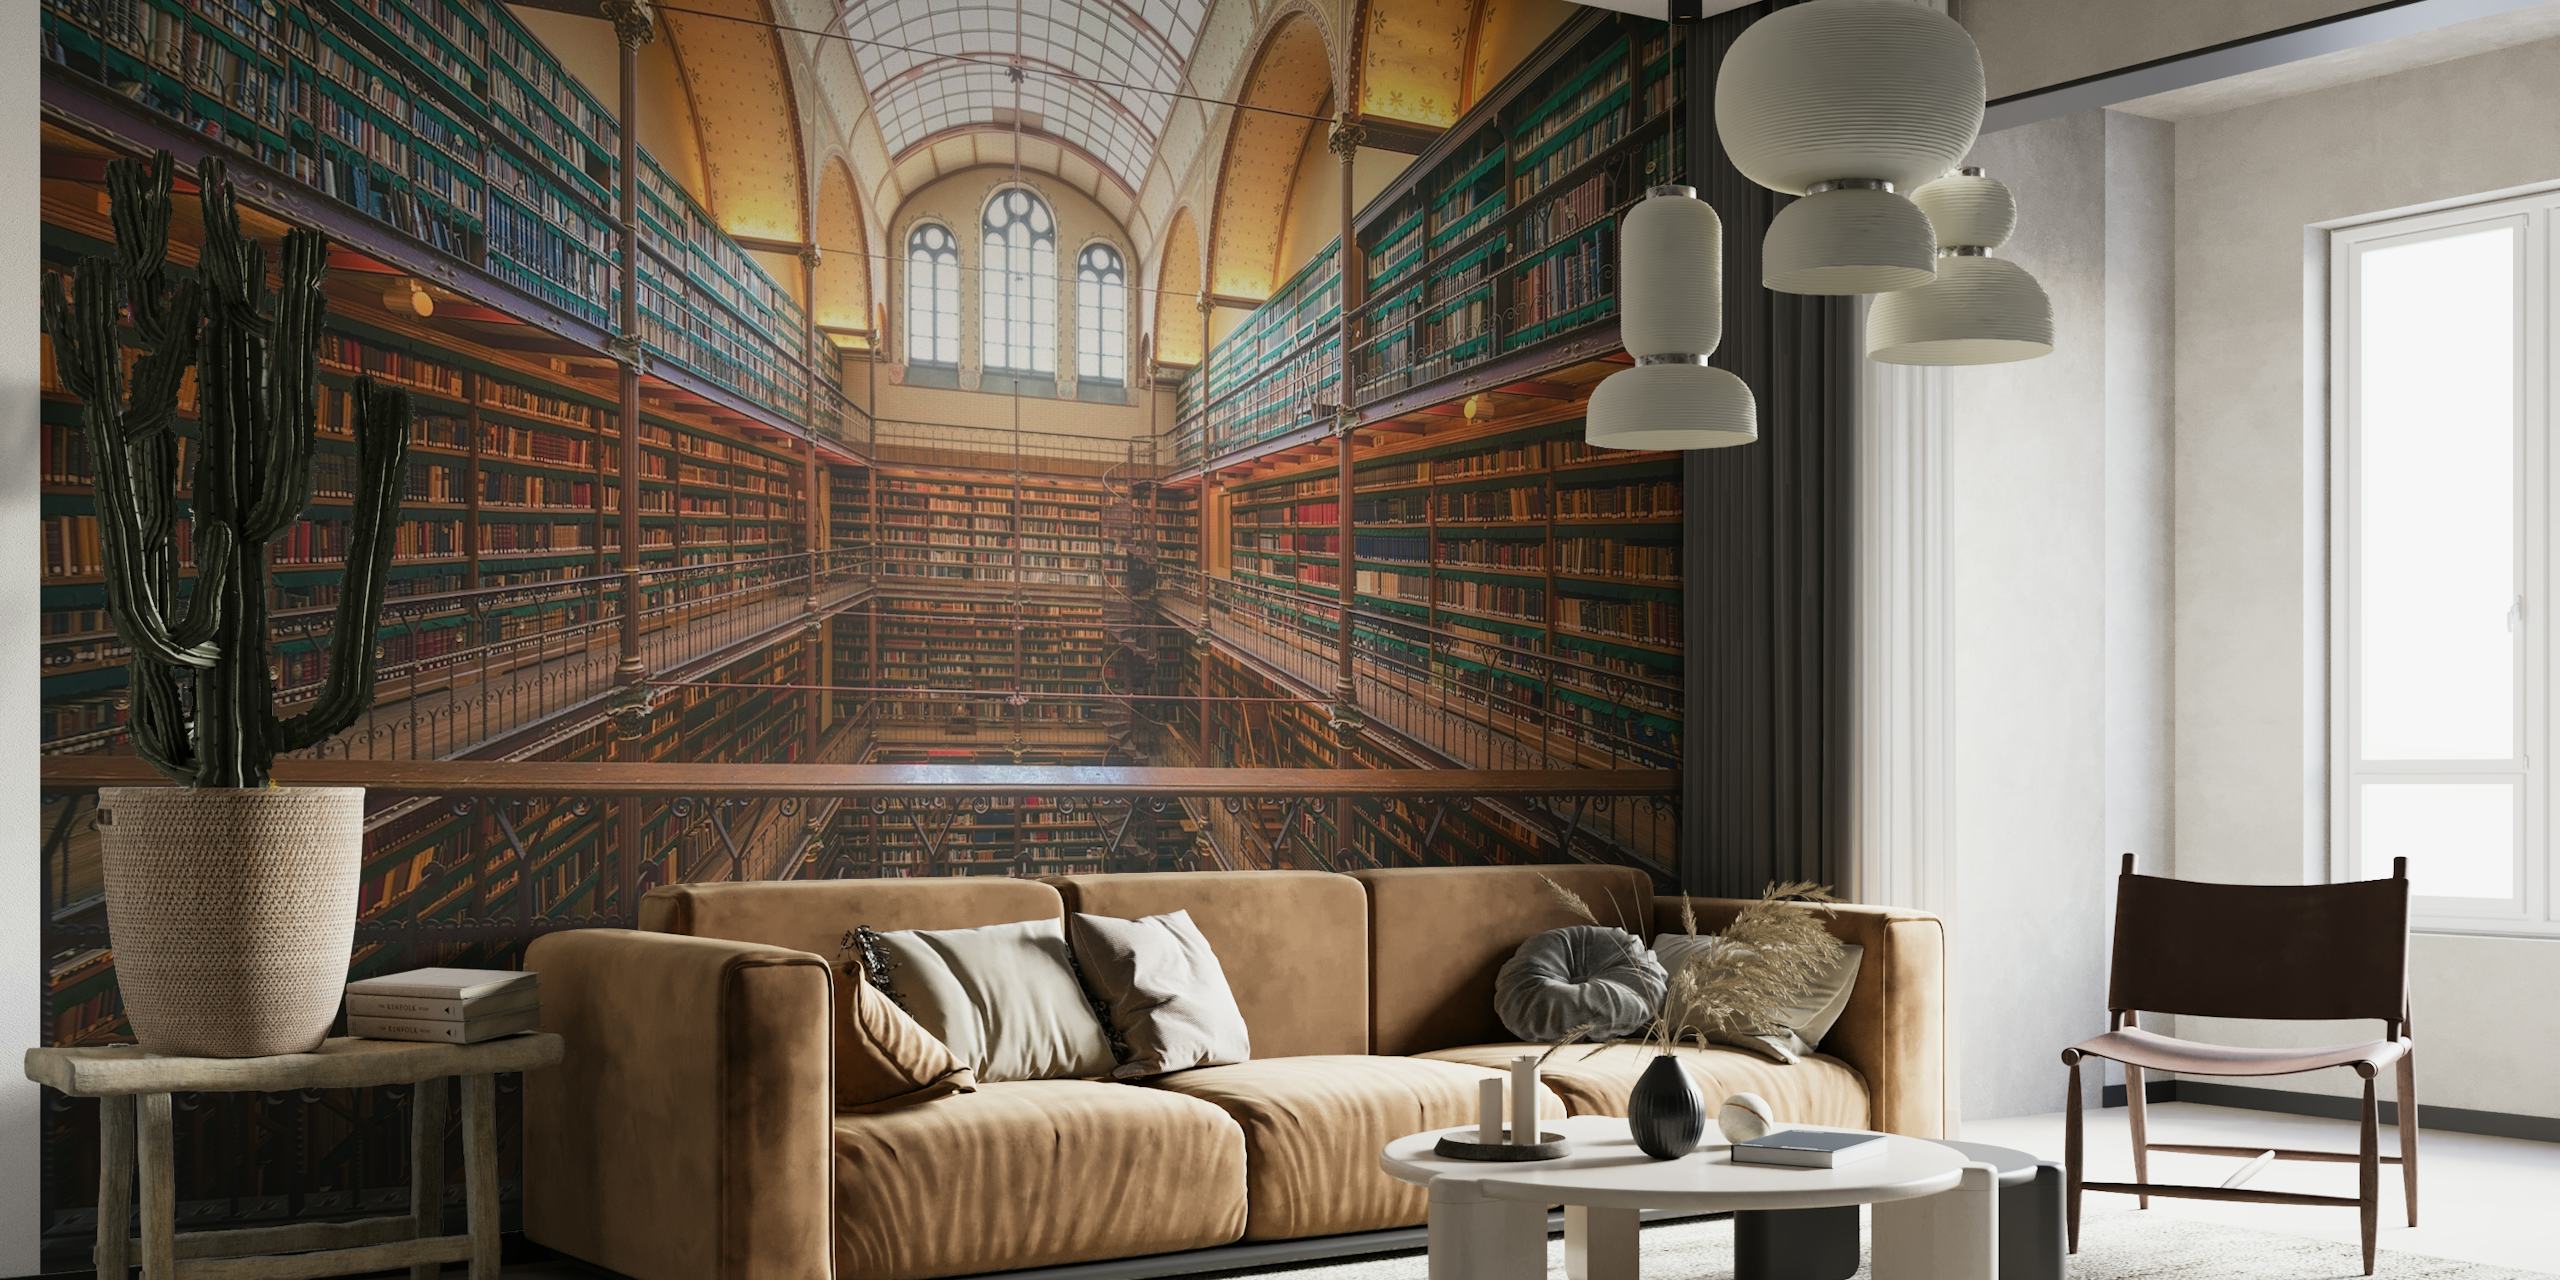 Veliki unutarnji zidni mural knjižnice Rijksmuseum